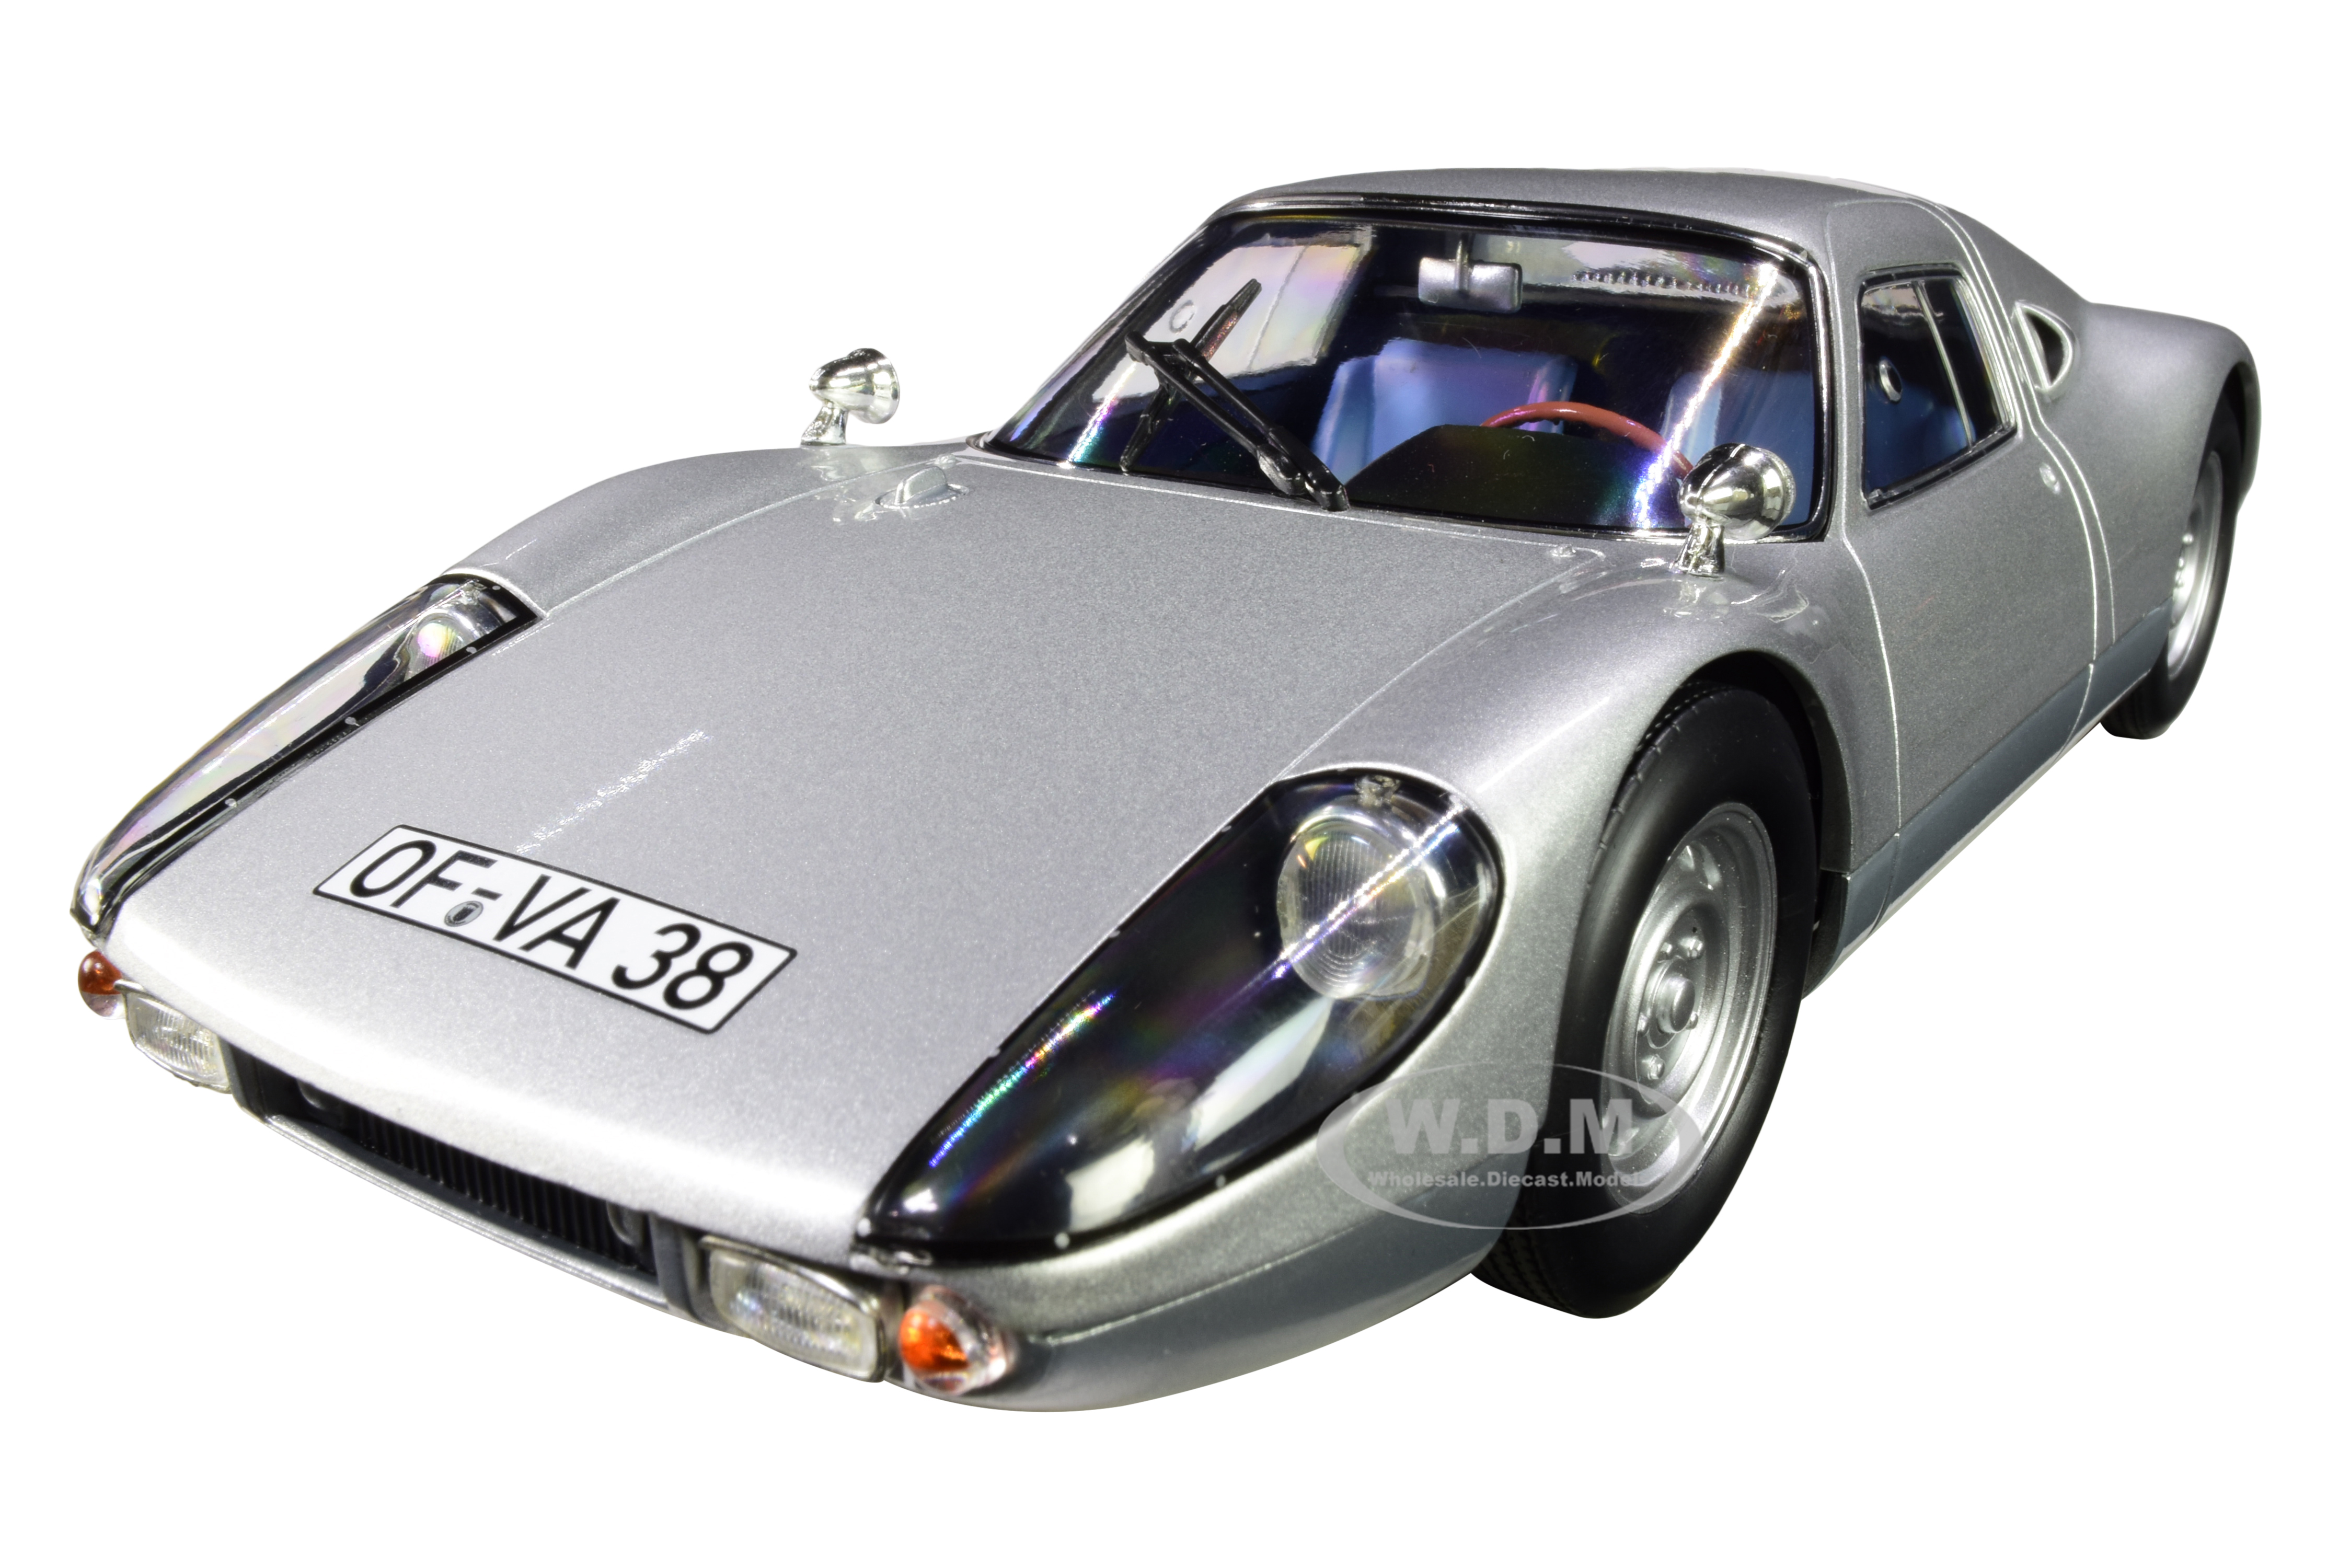 1964 Porsche Carrera 904 Gts Silver With Blue Interior 1/18 Diecast Model Car By Norev